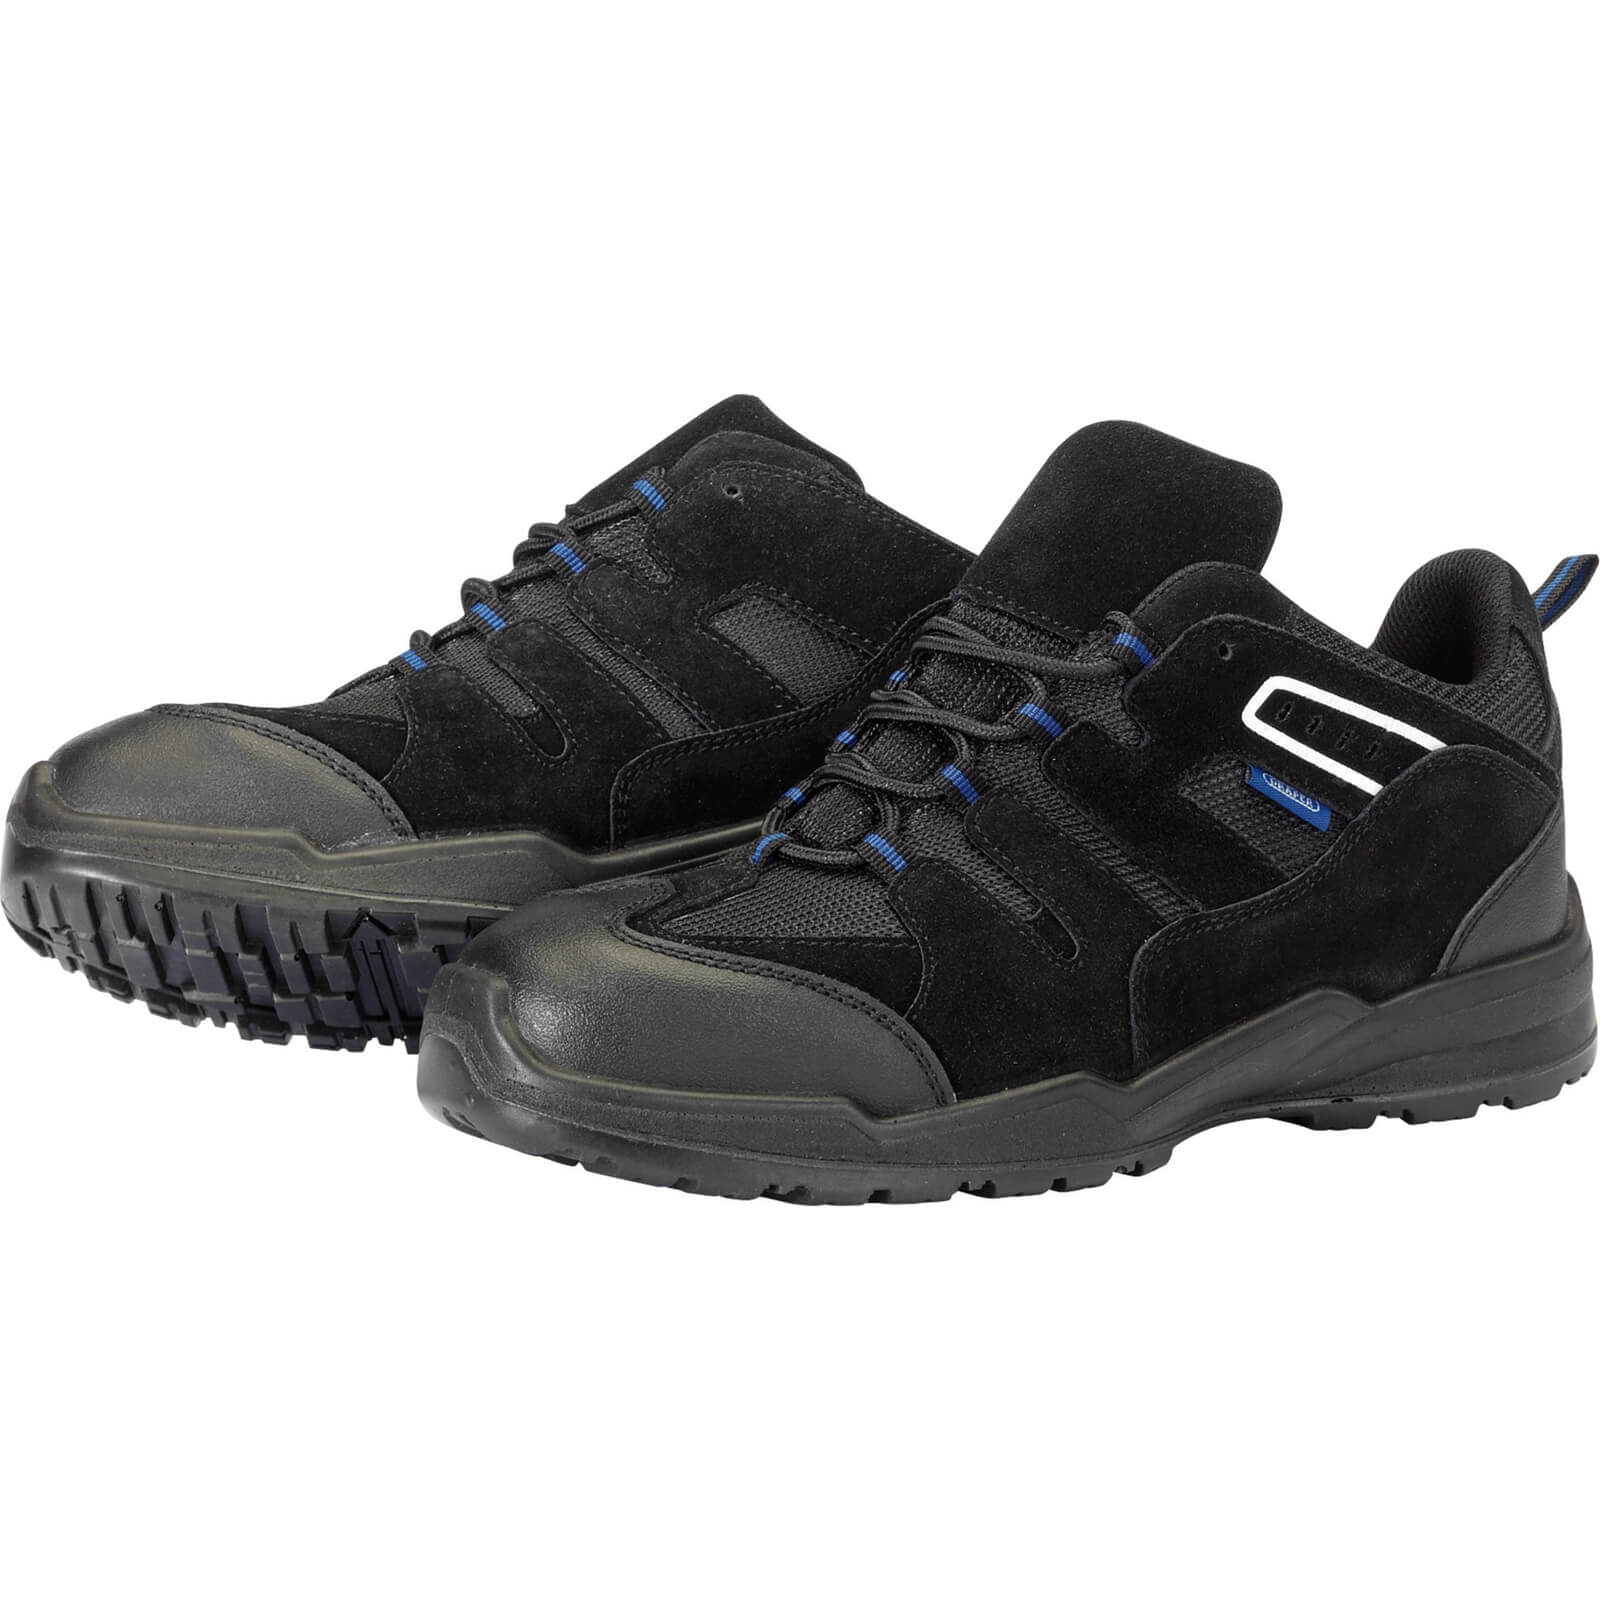 Image of Draper Trainer Style Safety Shoe Black Size 12